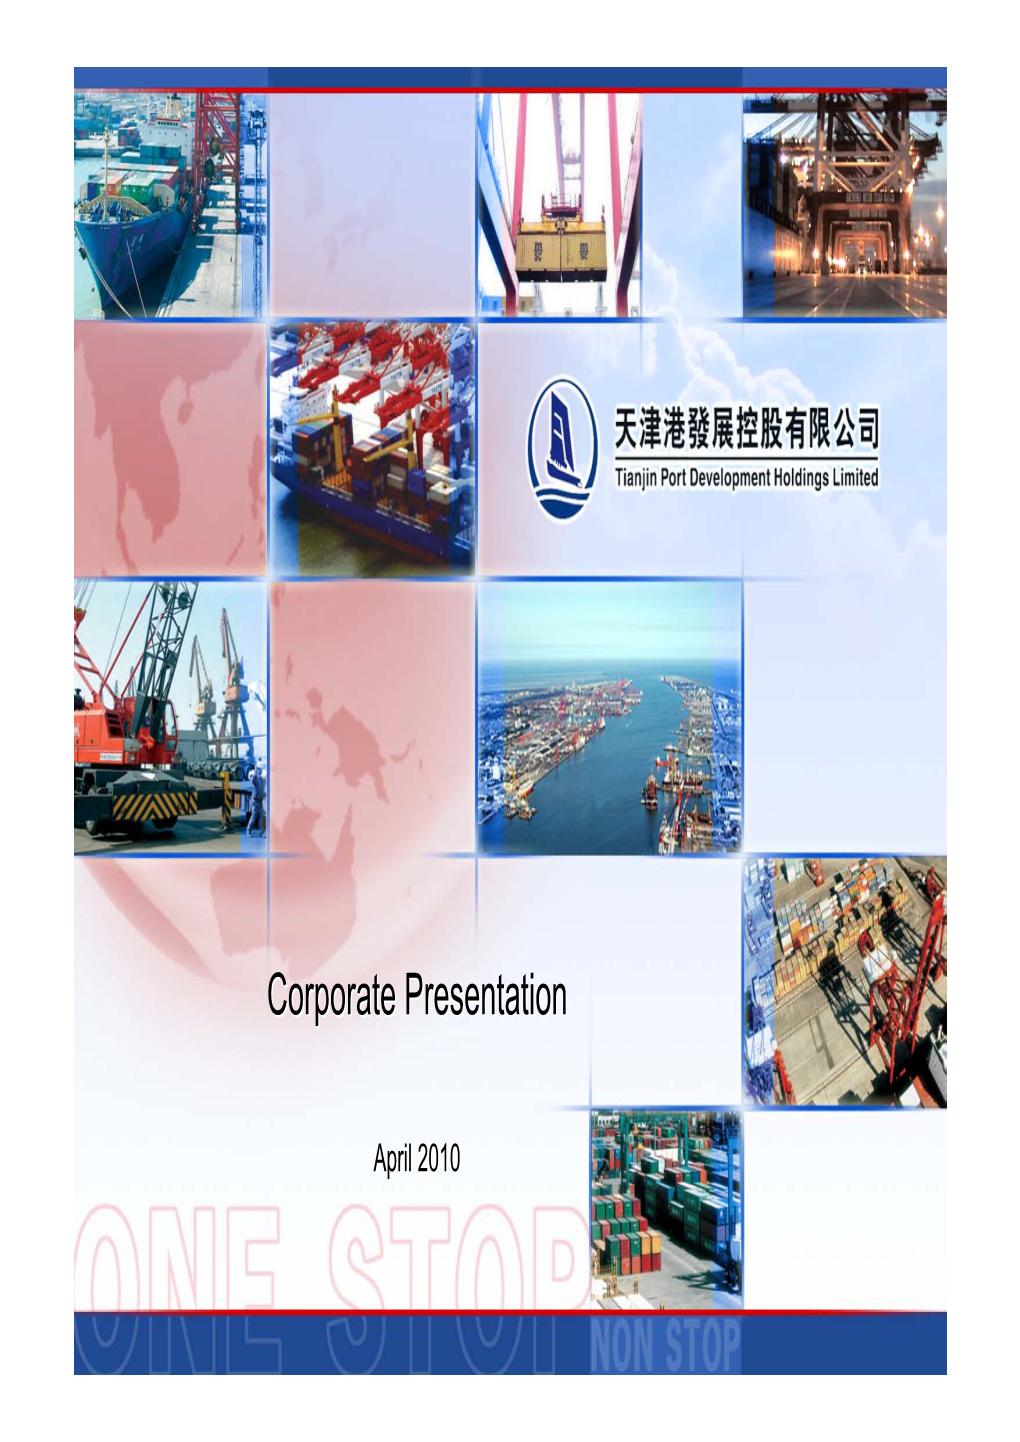 Cargo Handling HK$1,065 Million, Revenue from Sales Business HK$337 Million